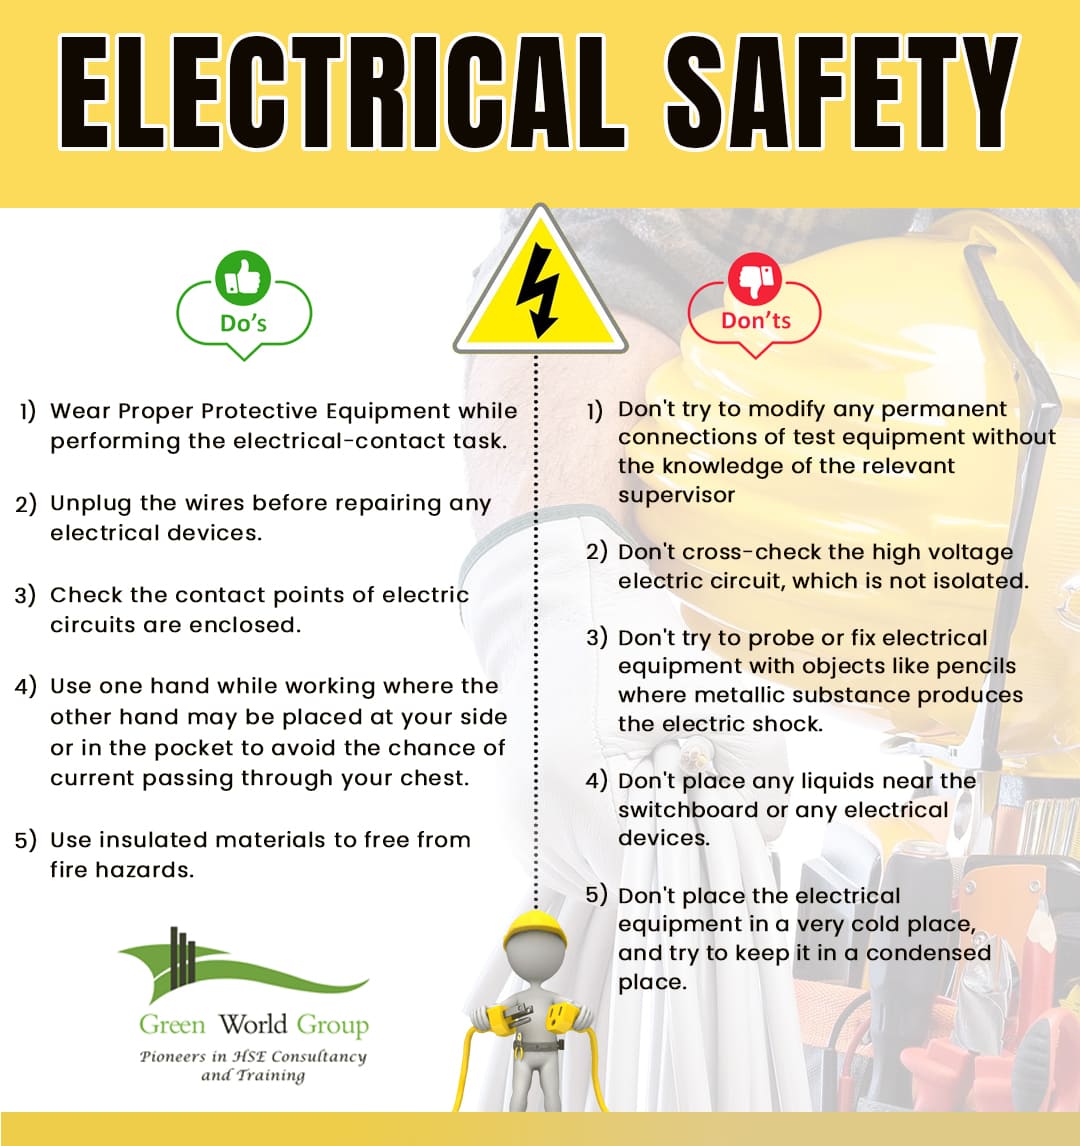 Fire & Electrical Safety | Milton Keynes & Throughout UK